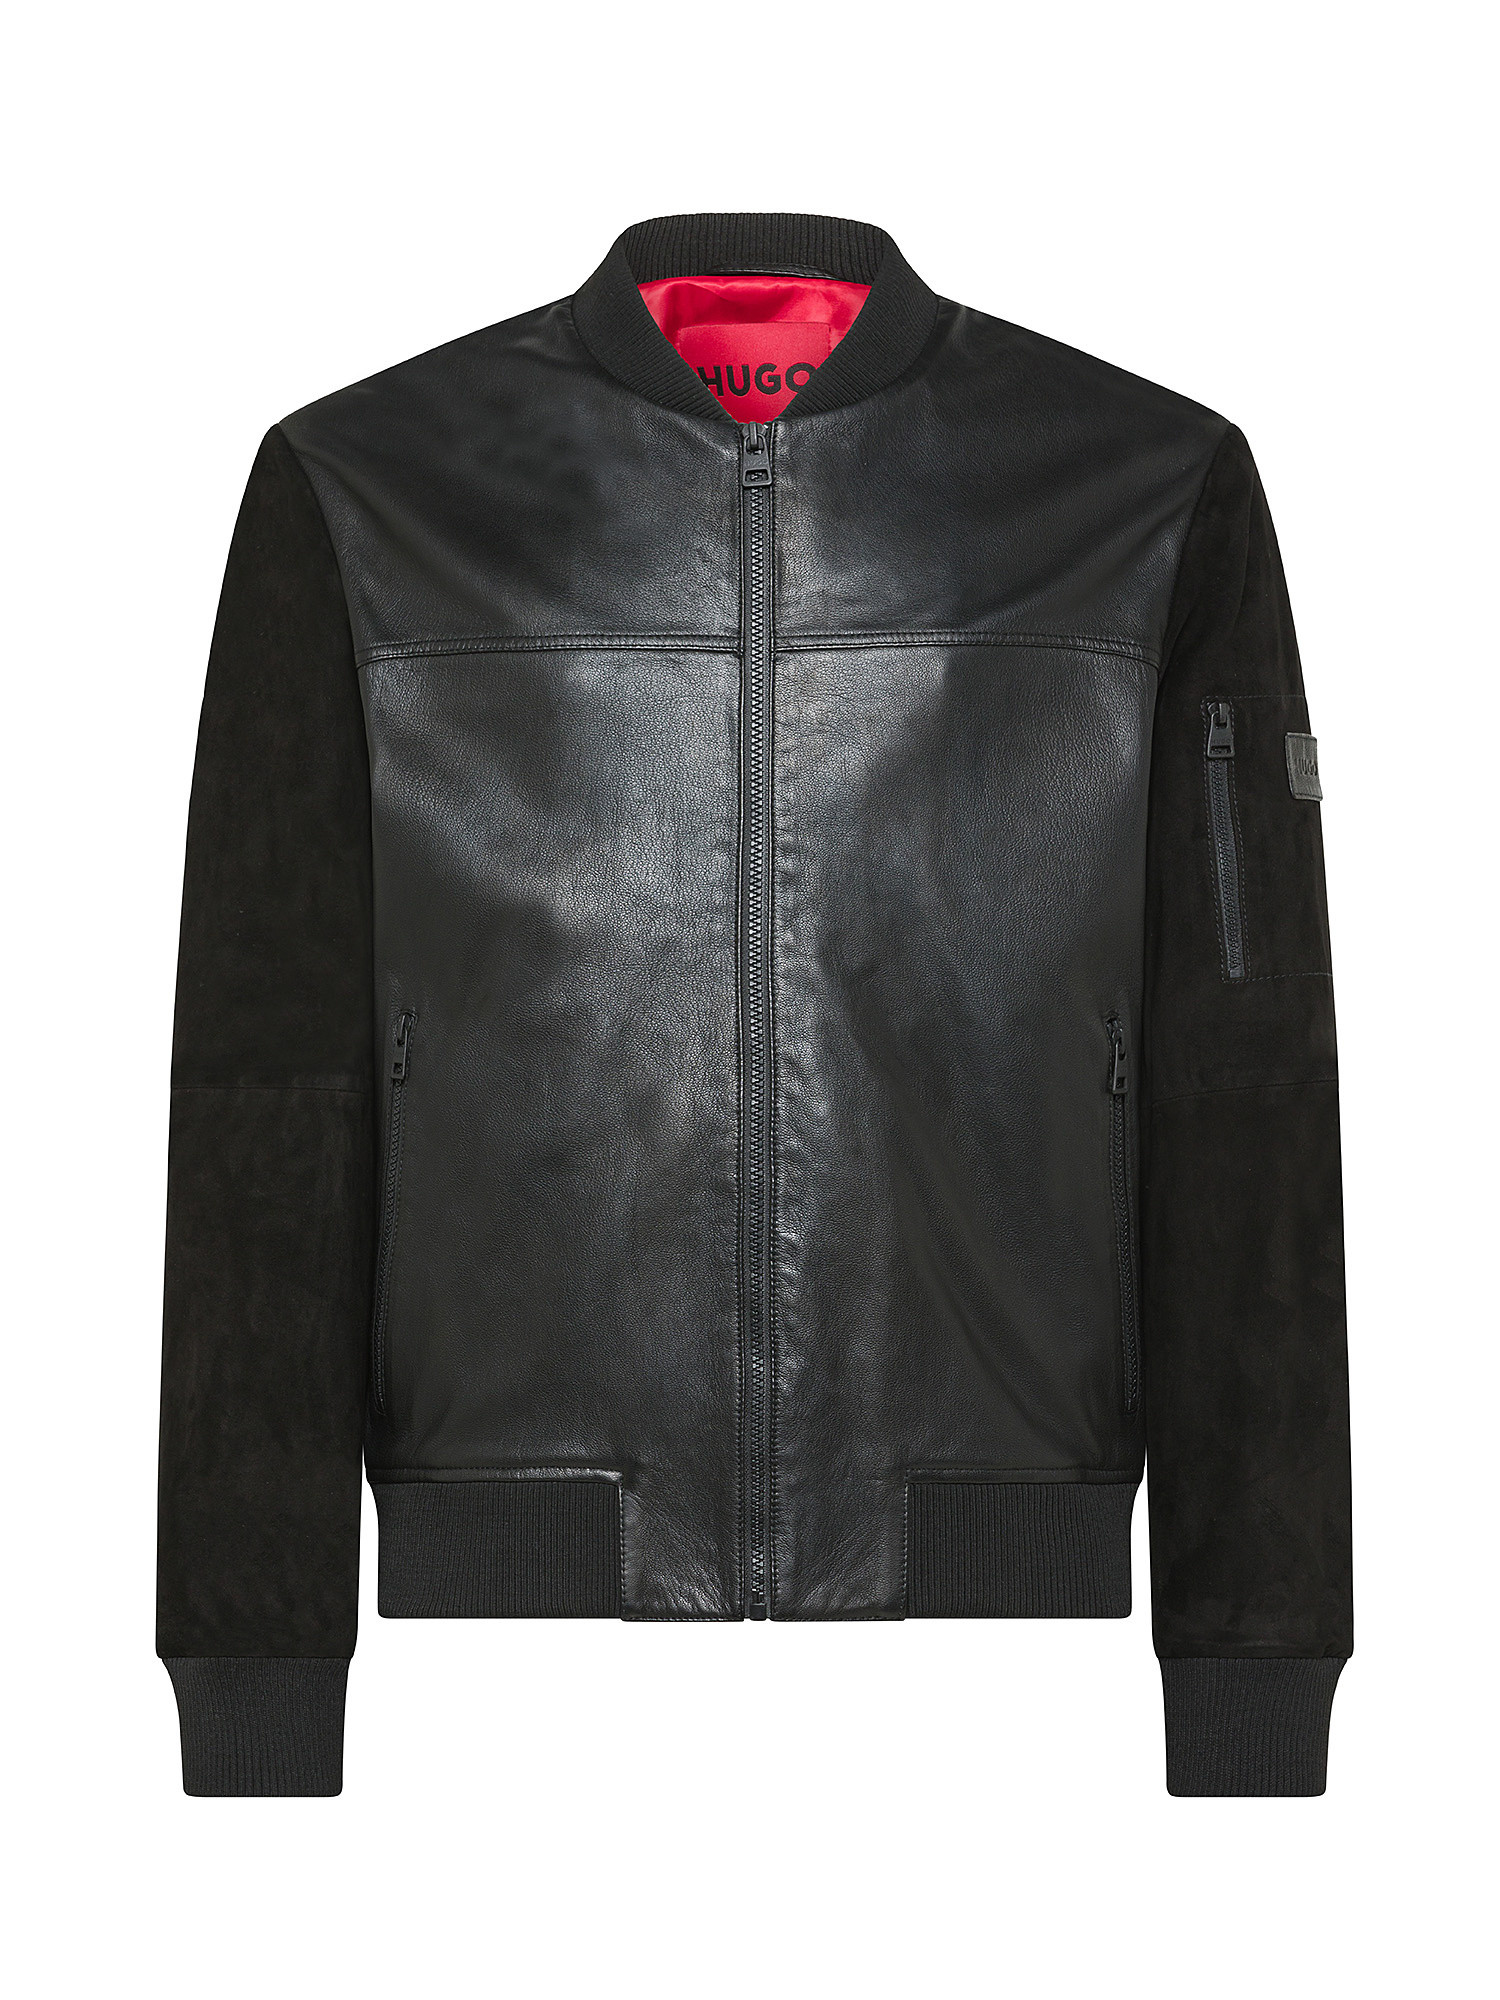 Hugo - Leather jacket, Black, large image number 0